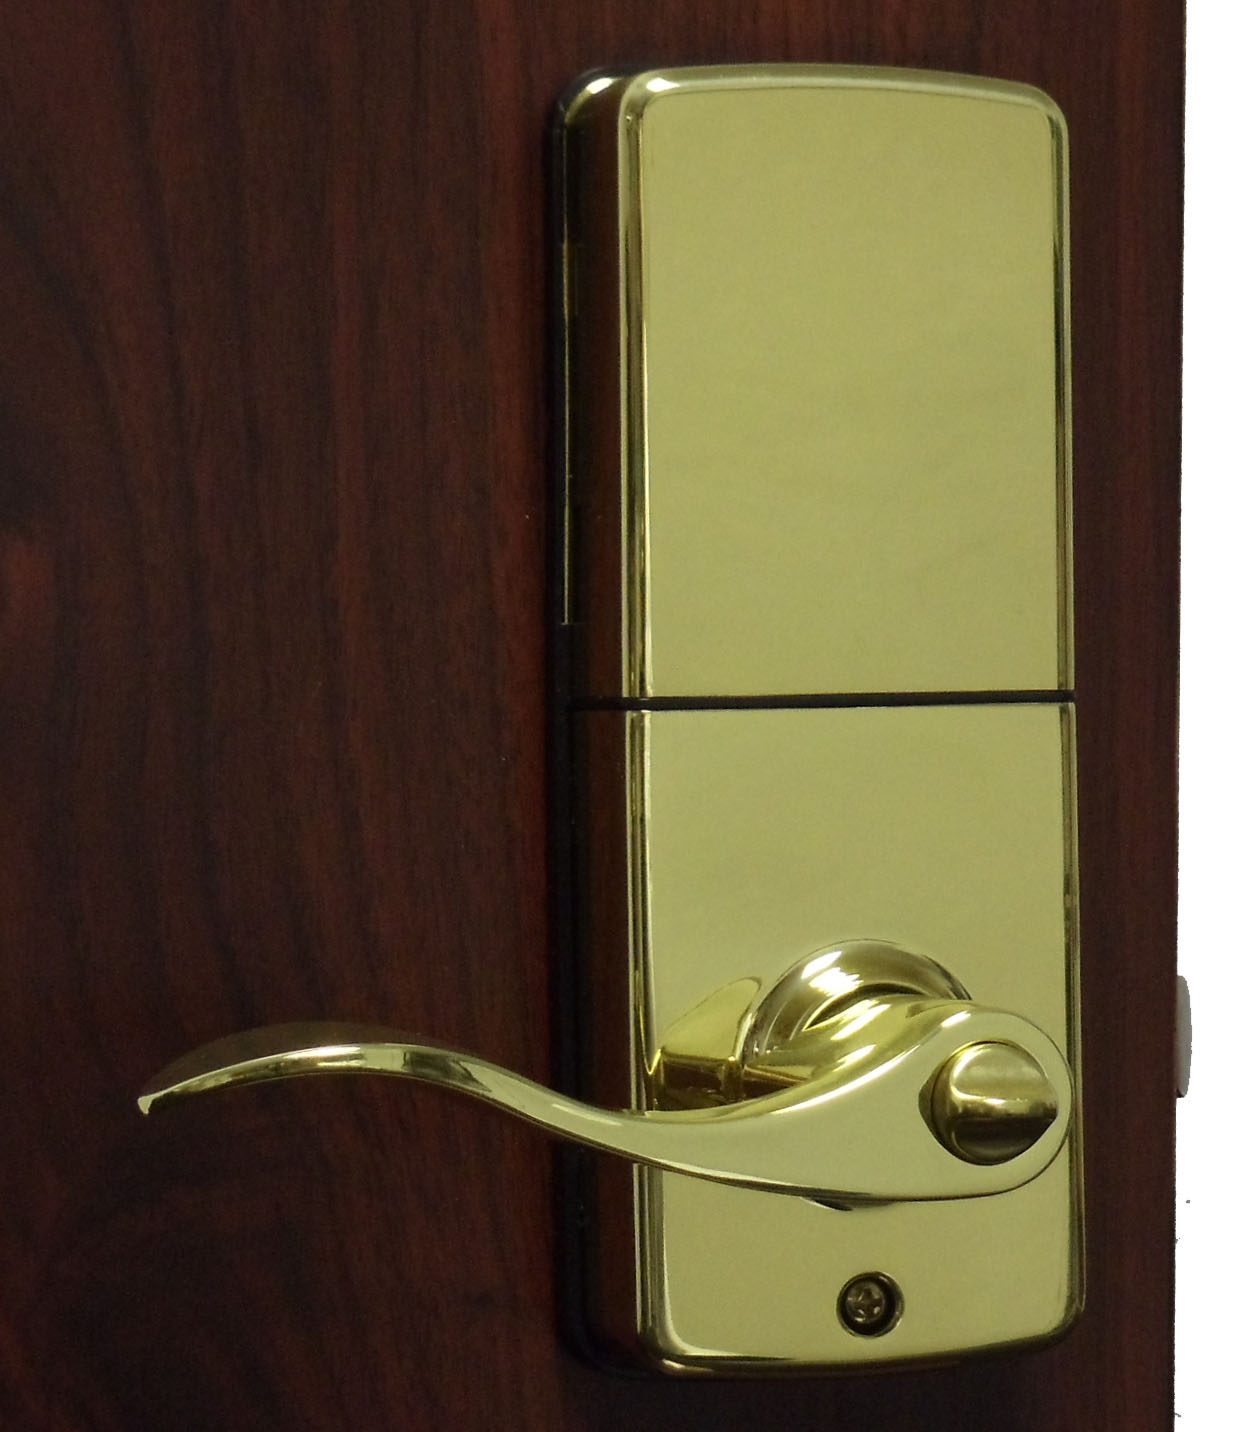 Lockey E-985-OIL-R E Digital Keyless Electronic Lever Lock Remote Capable - Antique Bronze - image 2 of 2